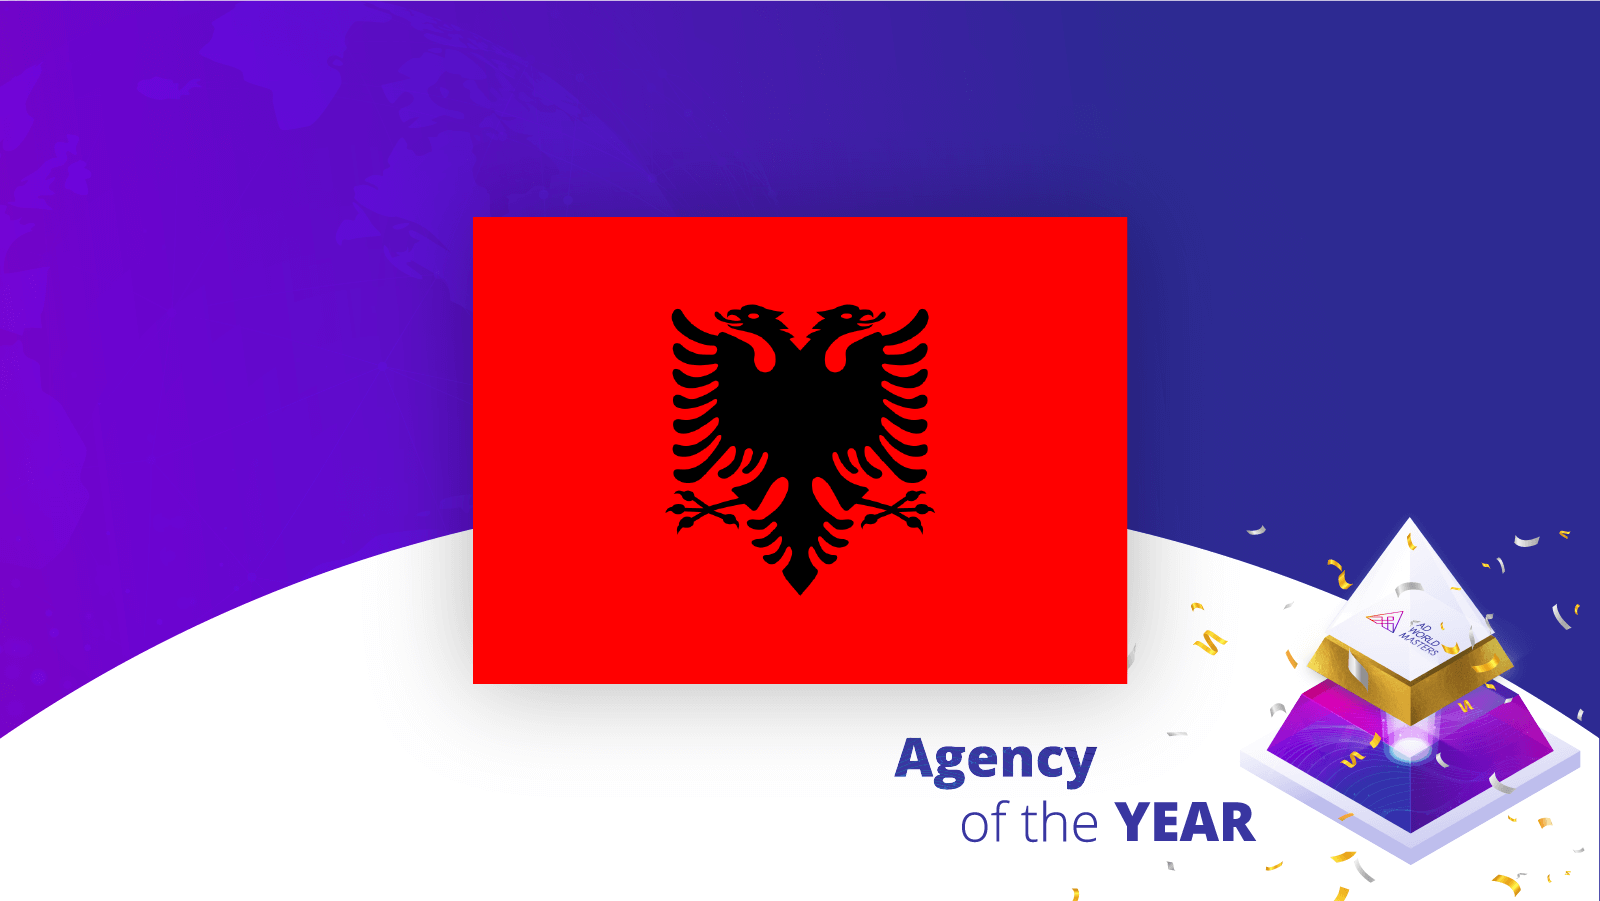 Agencies of the Year Albania